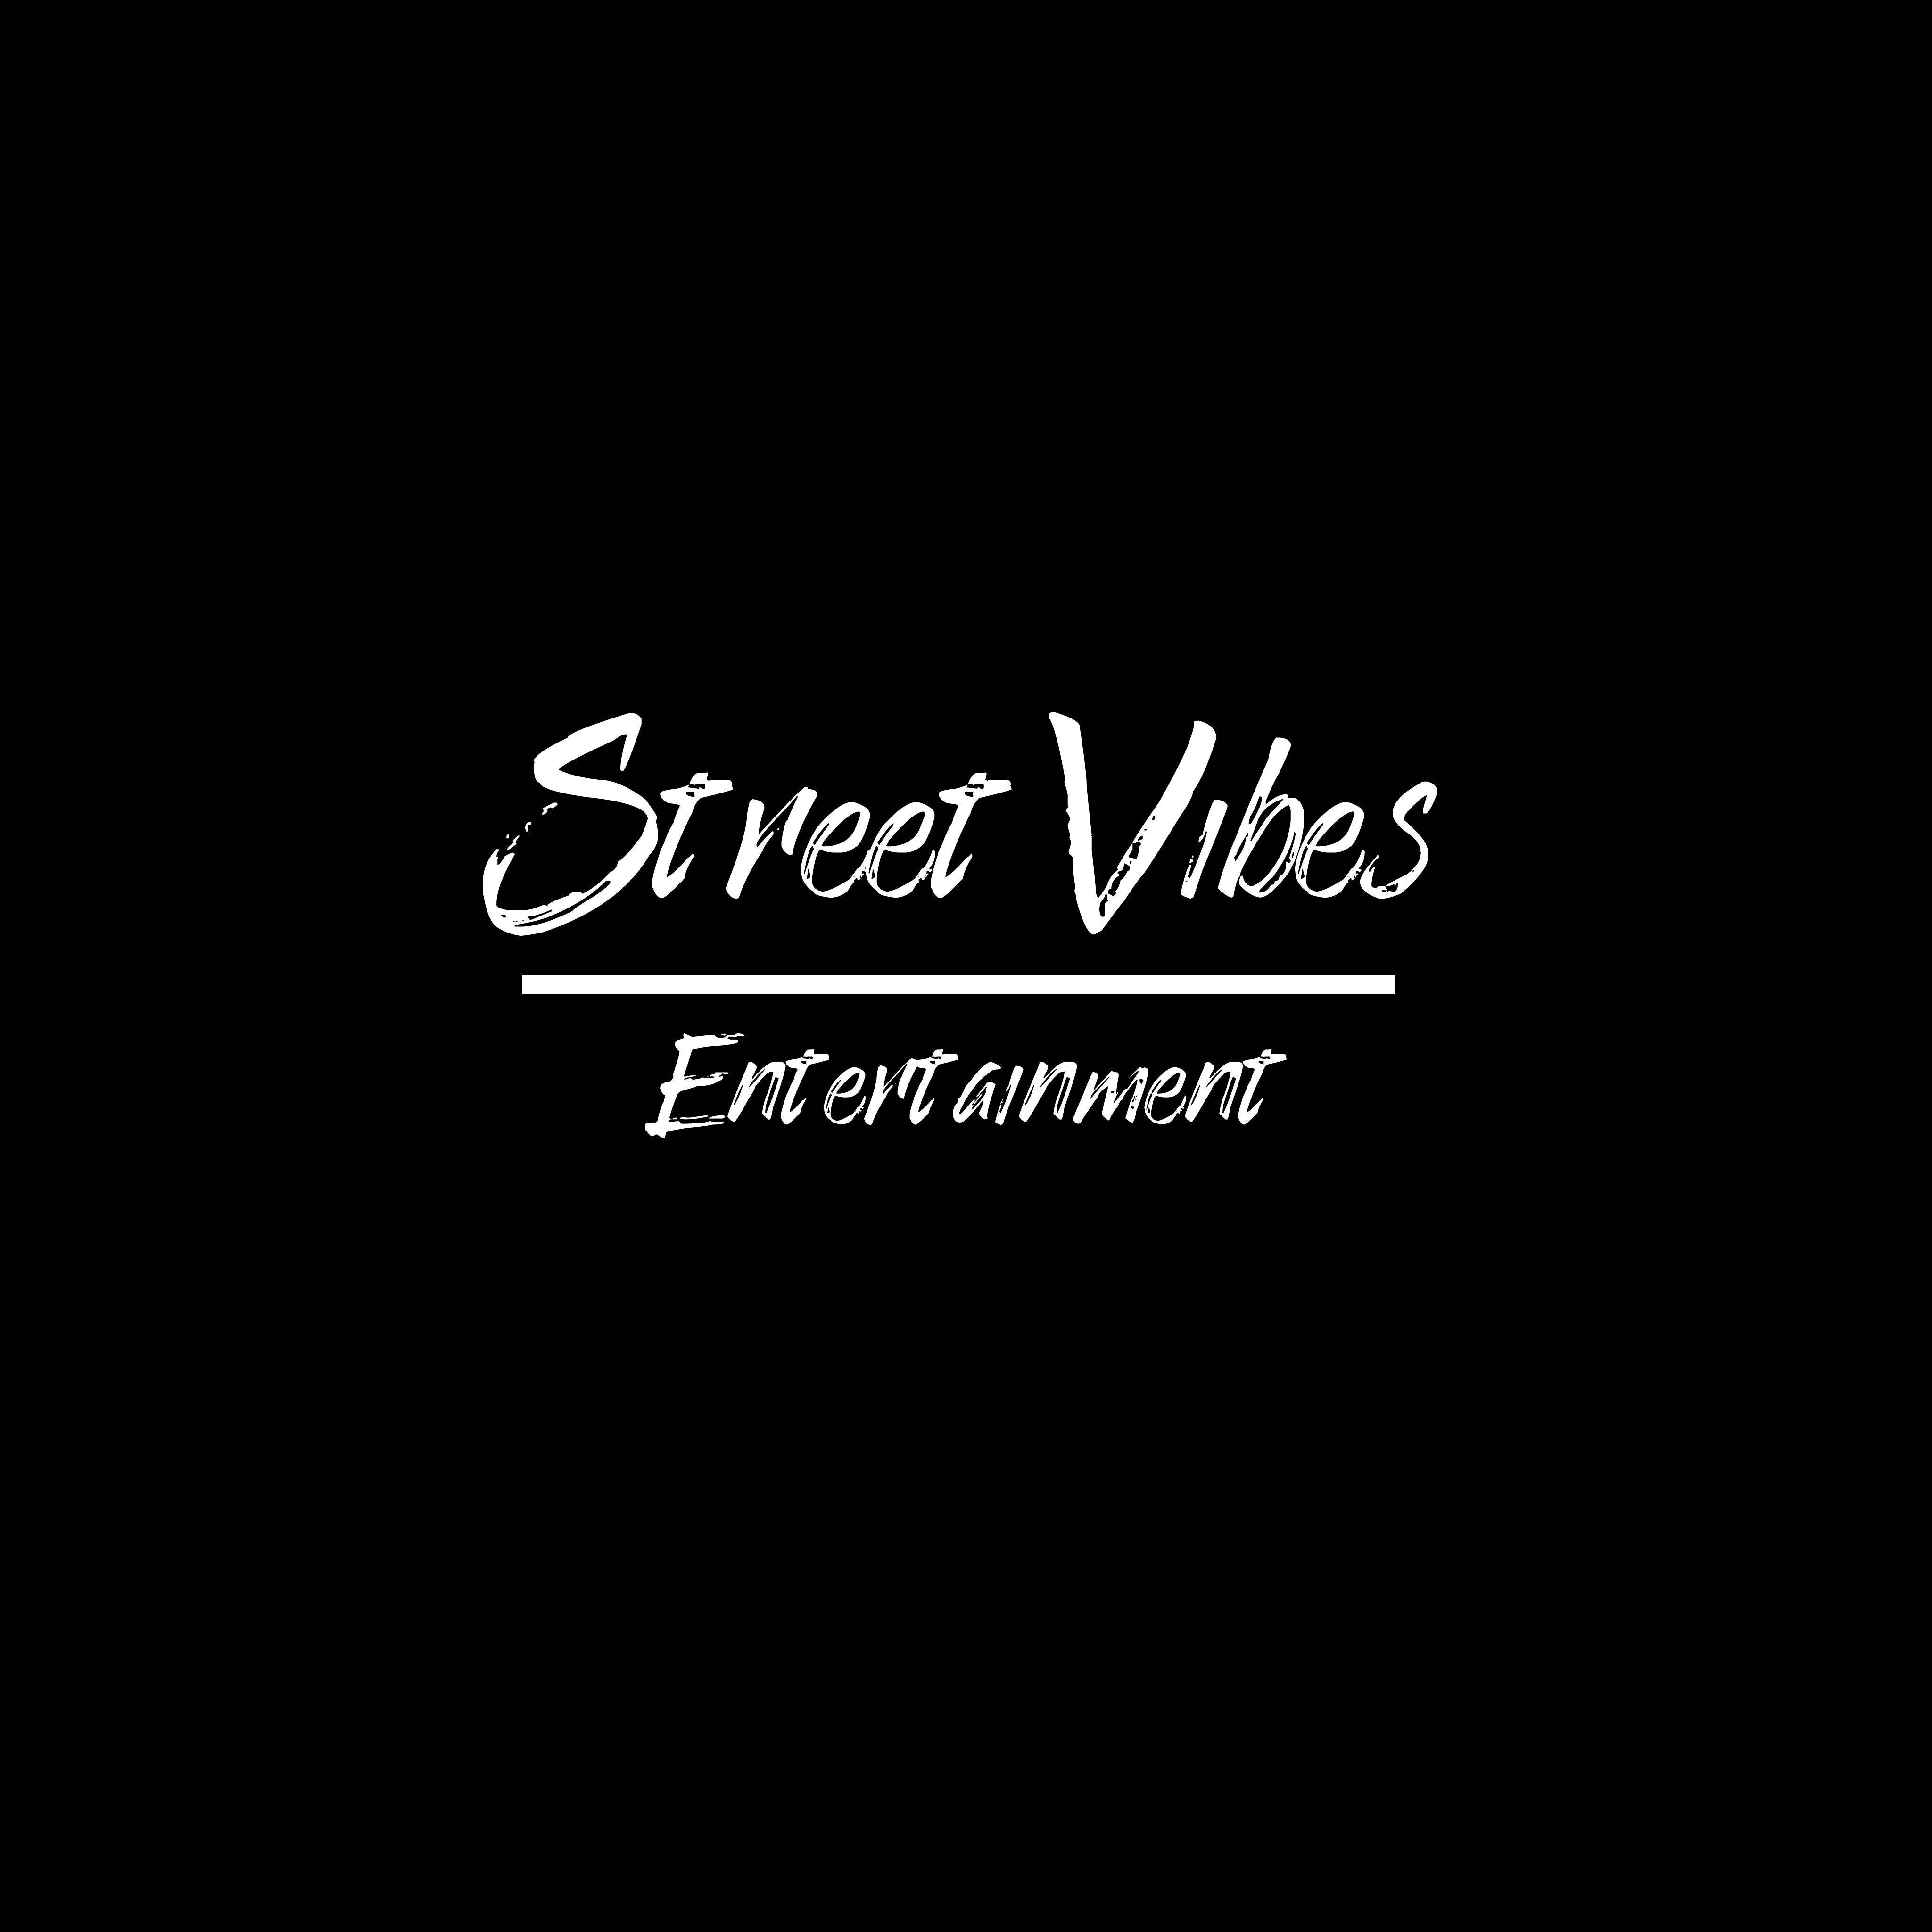 Street Vibes Entertainment